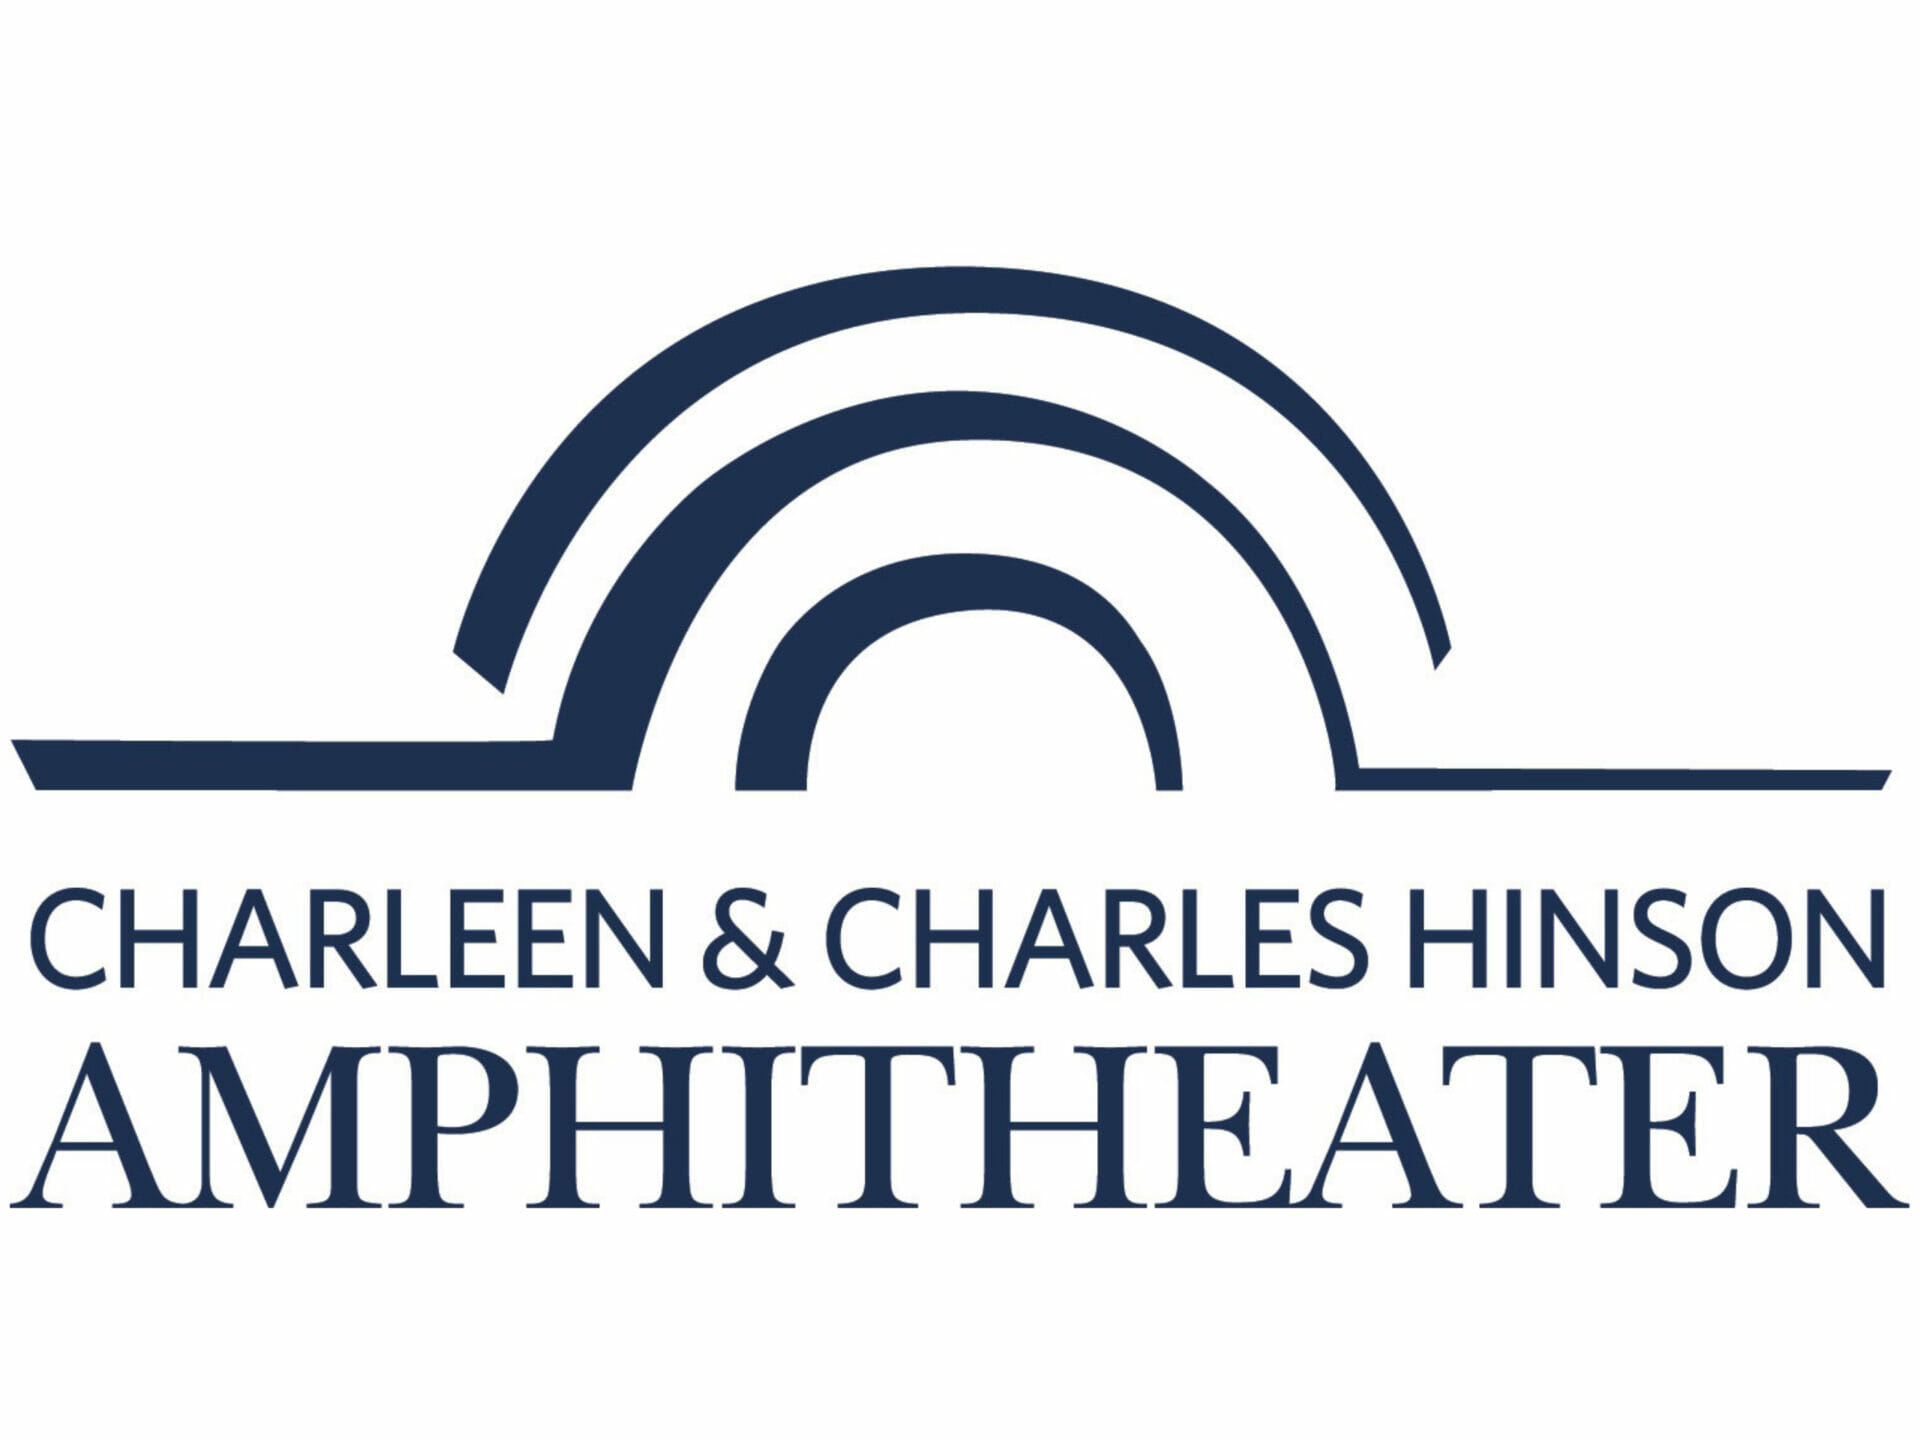 charleen & charles hinson ampitheater logo in new albany ohio